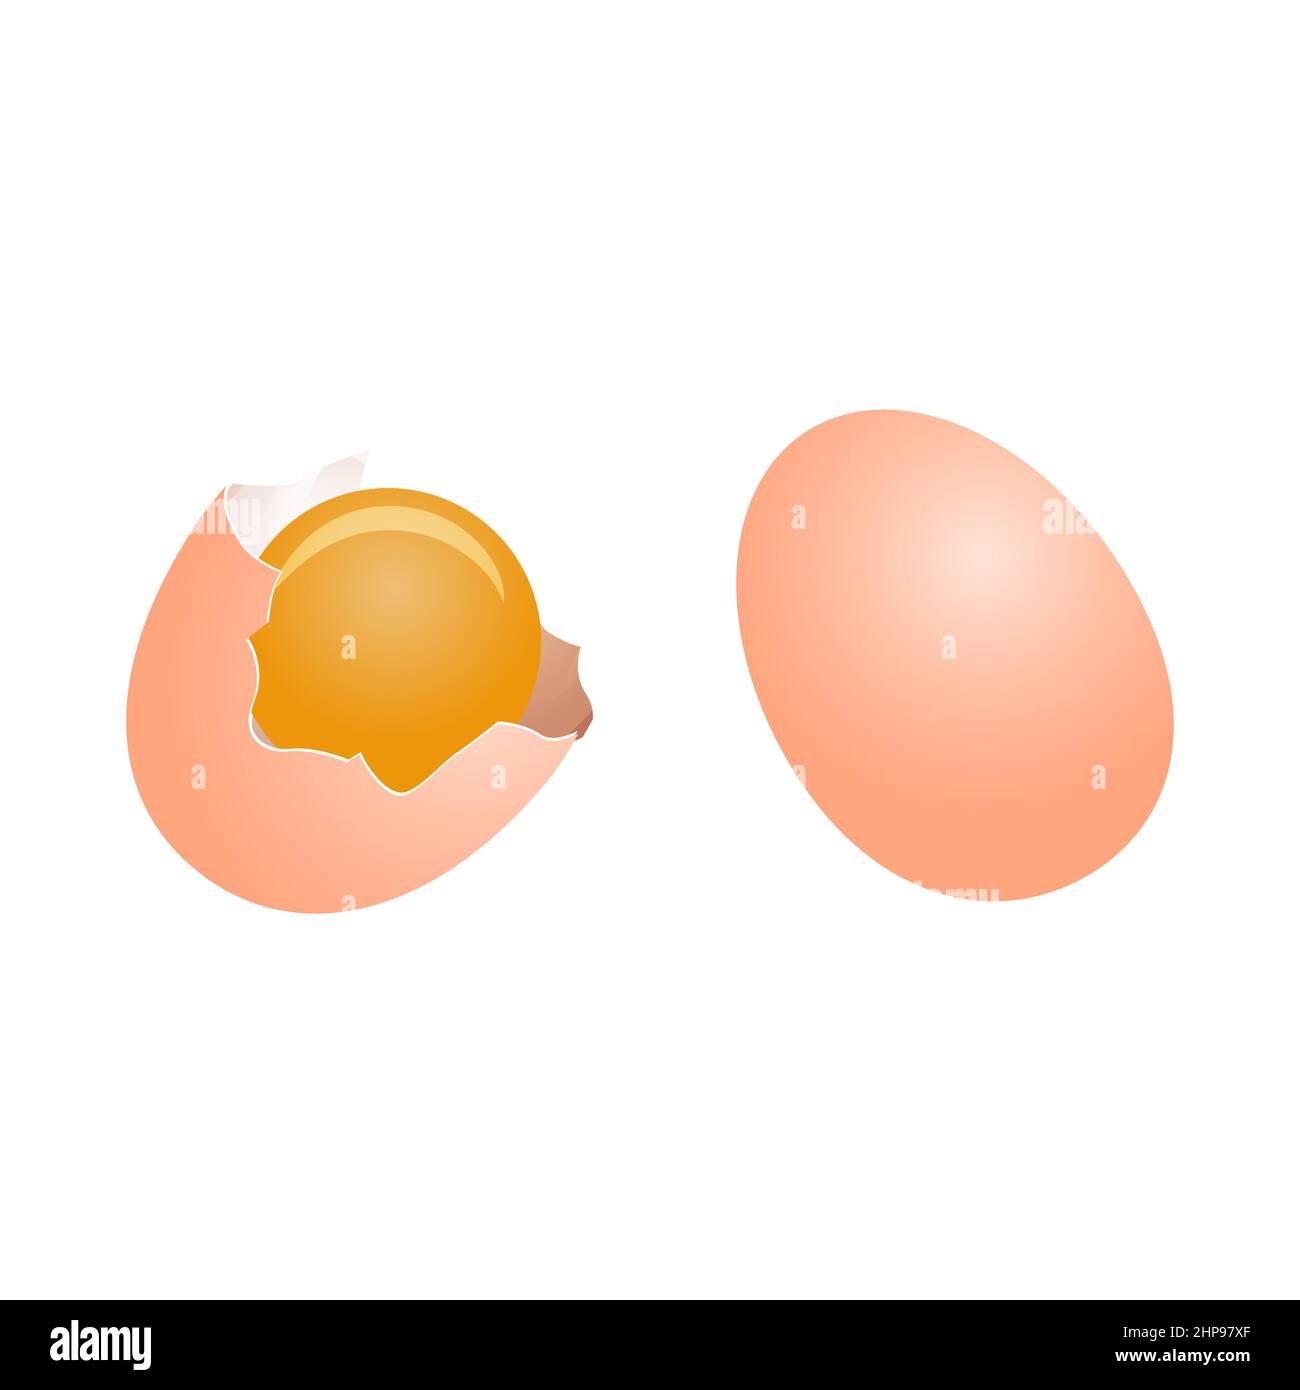 clip art of egg with cartoon design,vector illustration Stock Vector